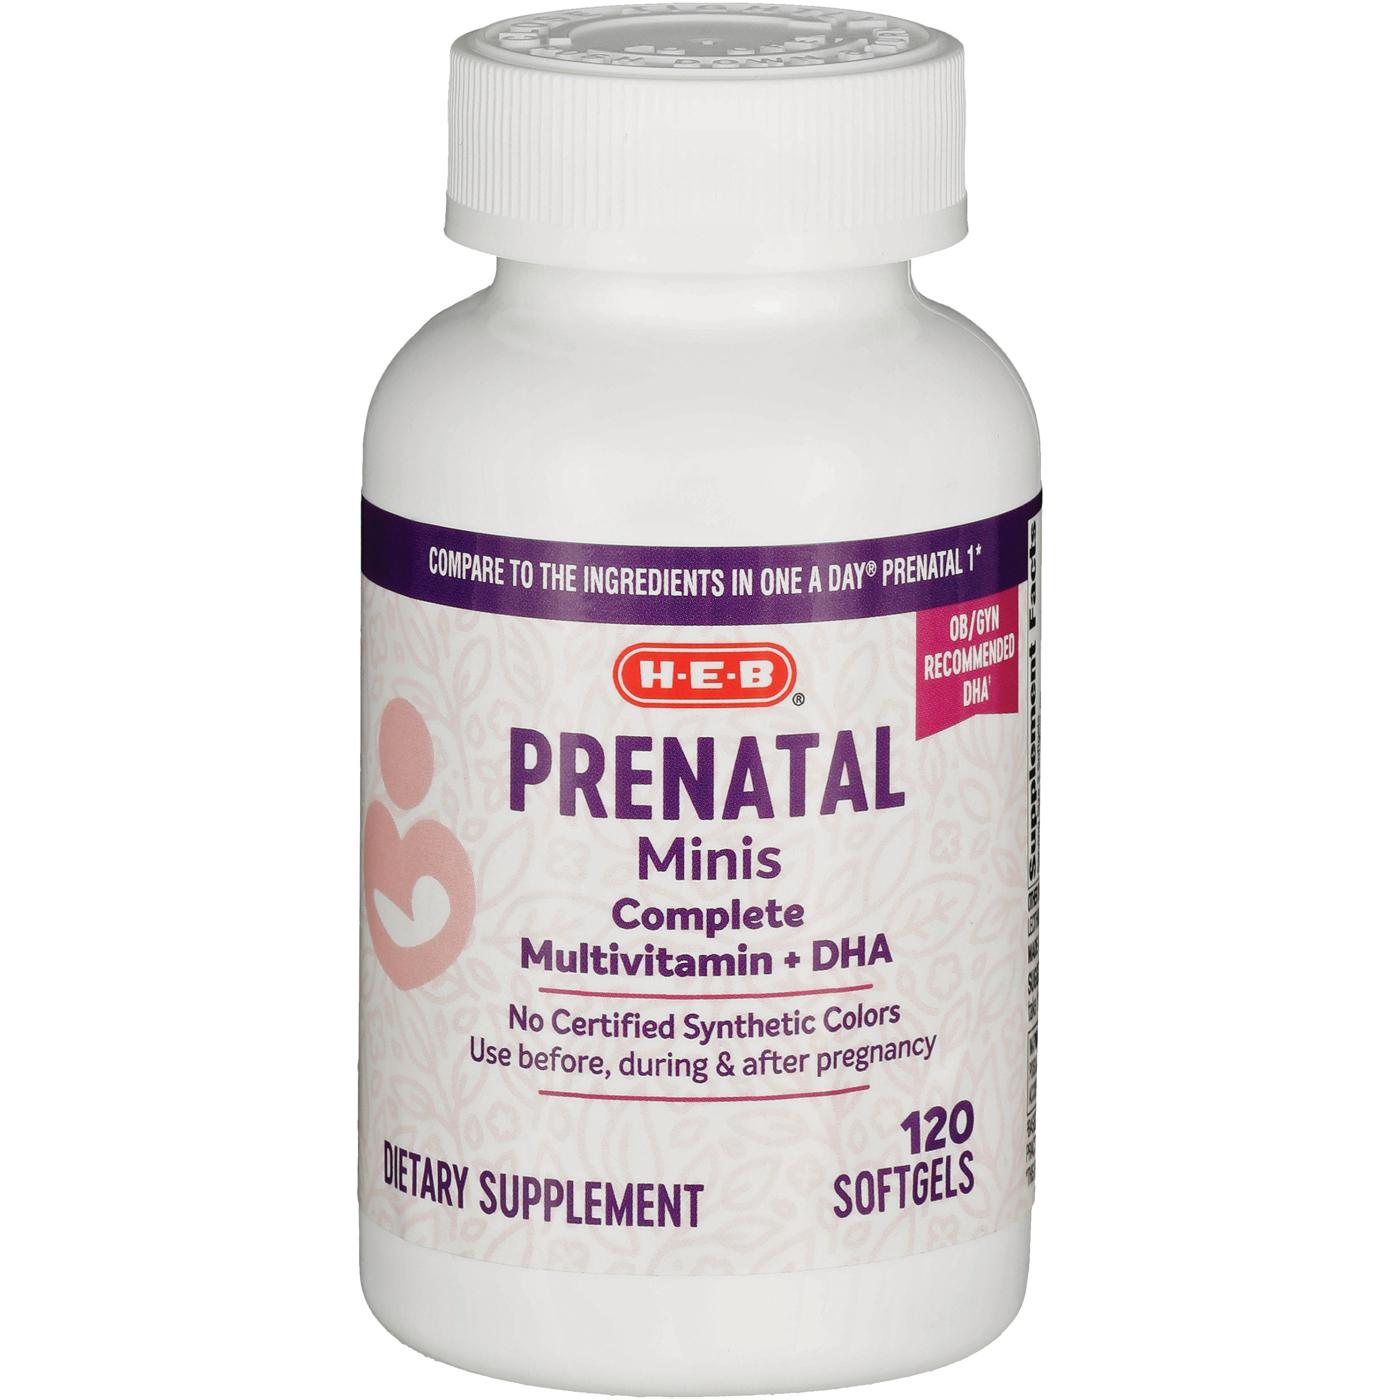 H-E-B Prenatal Complete Multivitamin & DHA Mini Softgels; image 1 of 2